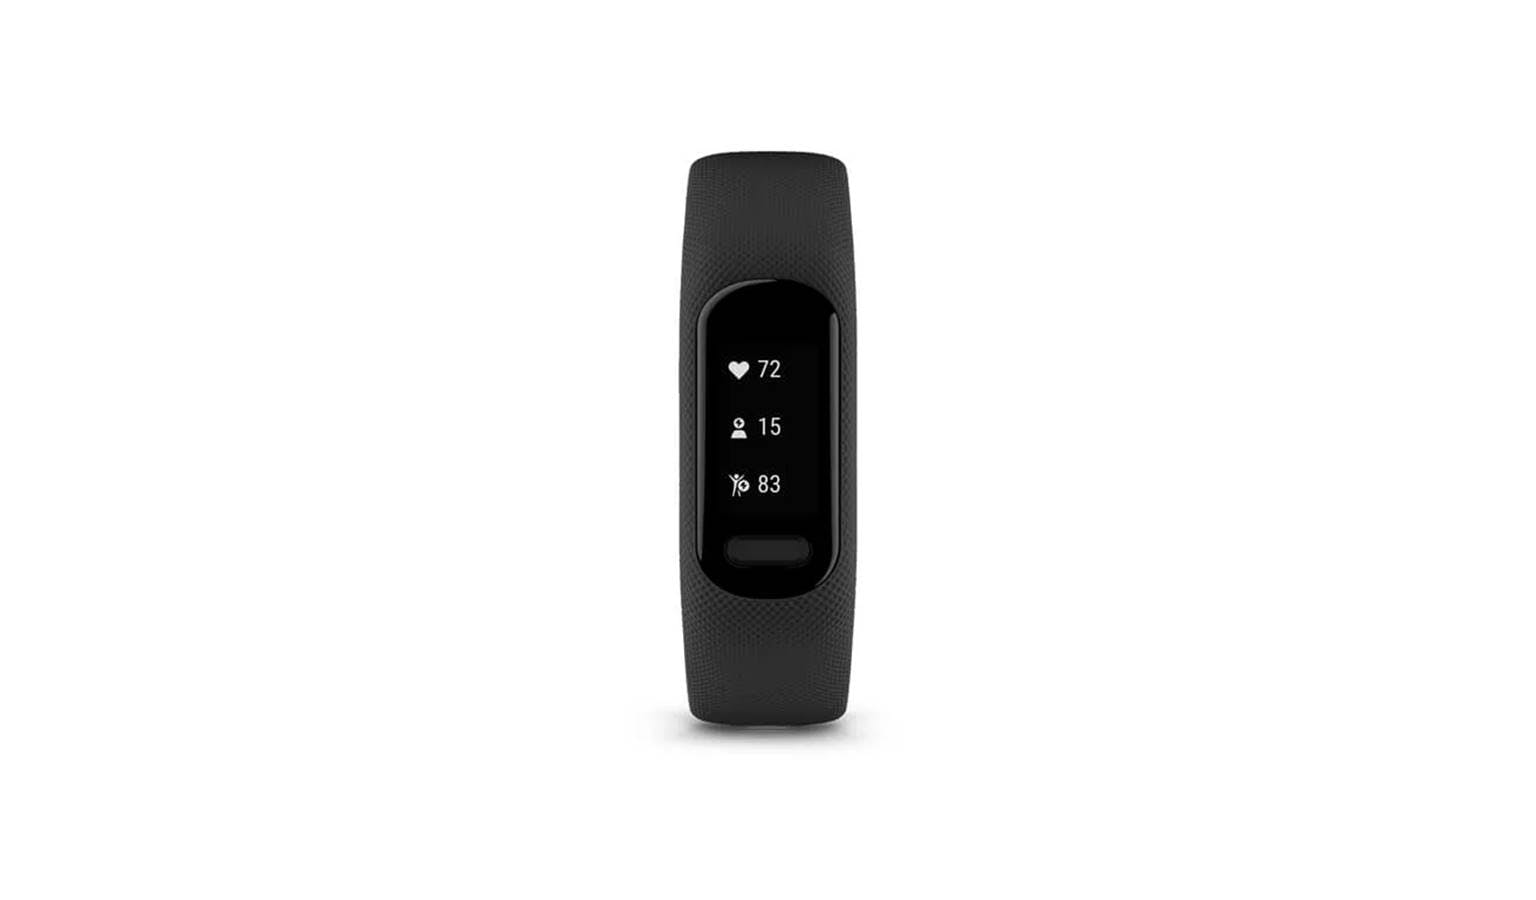 Garmin Vivosmart 5 Smart Fitness Tracker, Black Case with Black